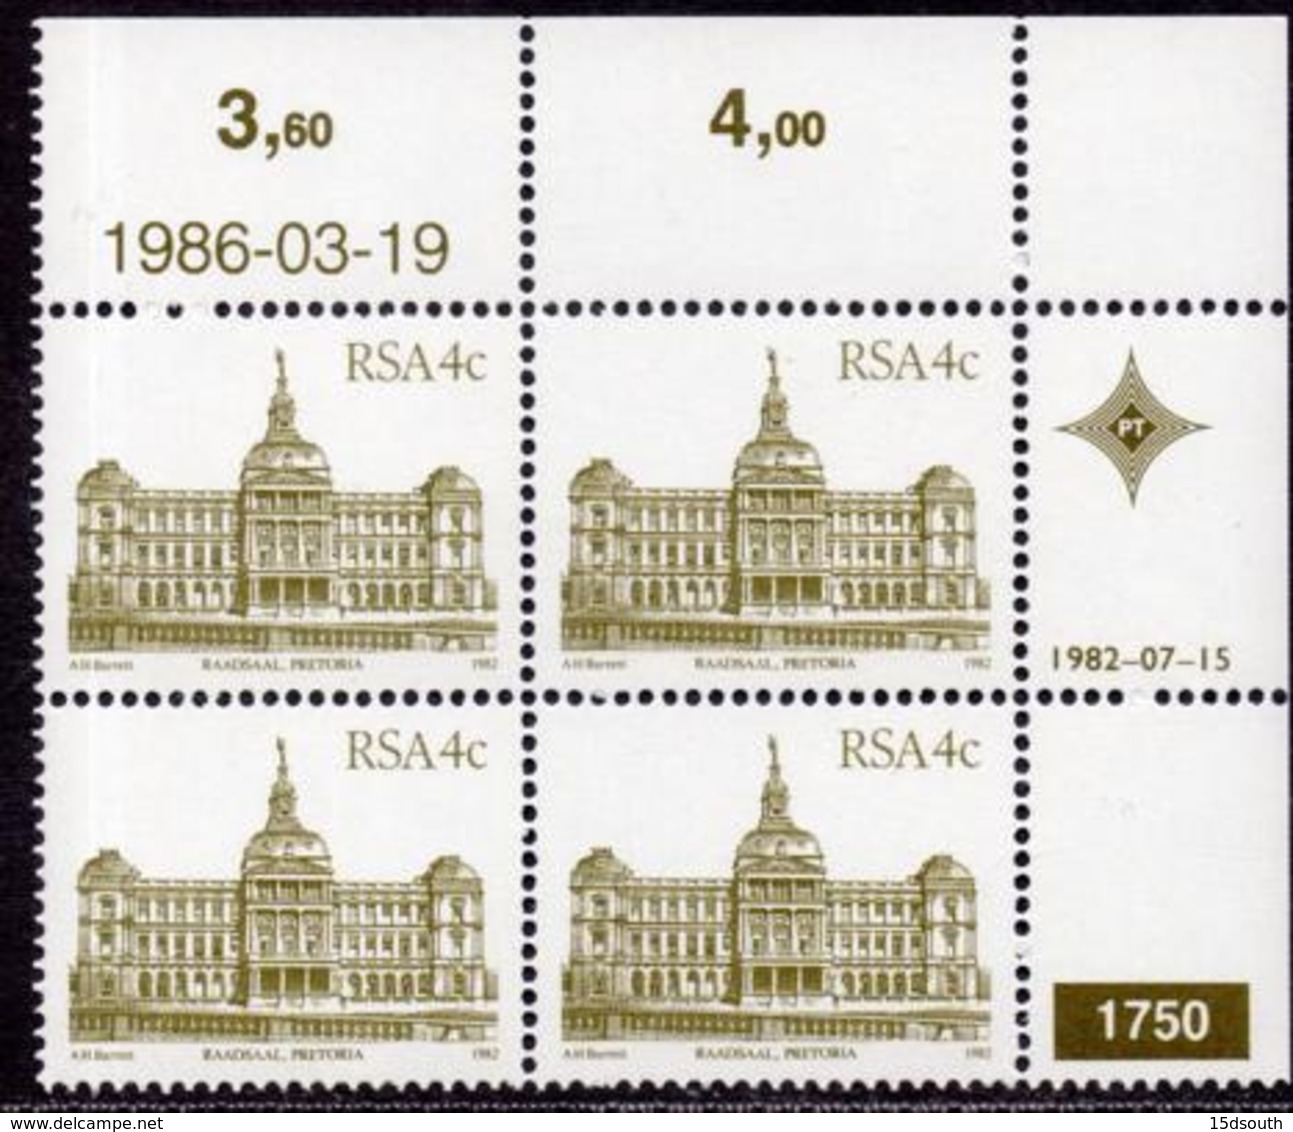 South Africa - 1982 Architecture Definitive 4c Control Block 1750 86.03.19 (**) # SG 514a - Hojas Bloque